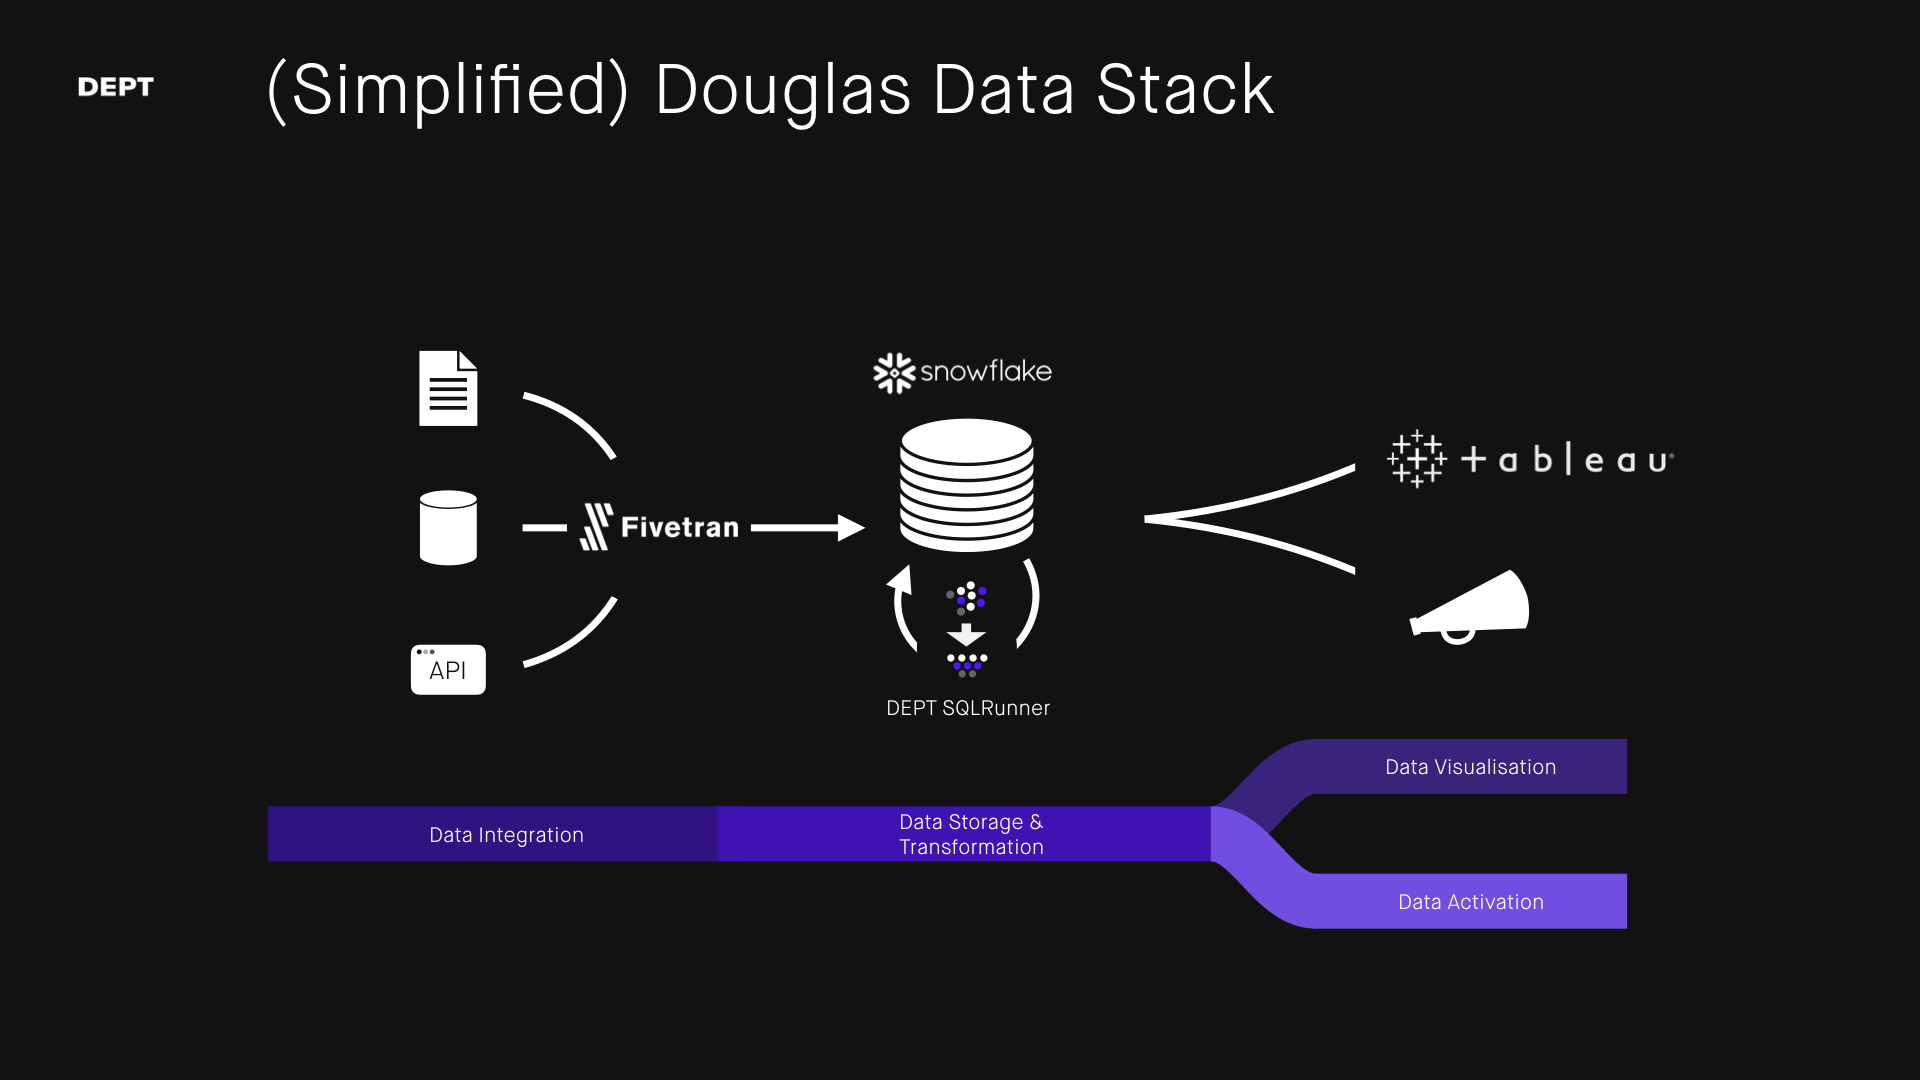 Simplified Douglas Data Stack